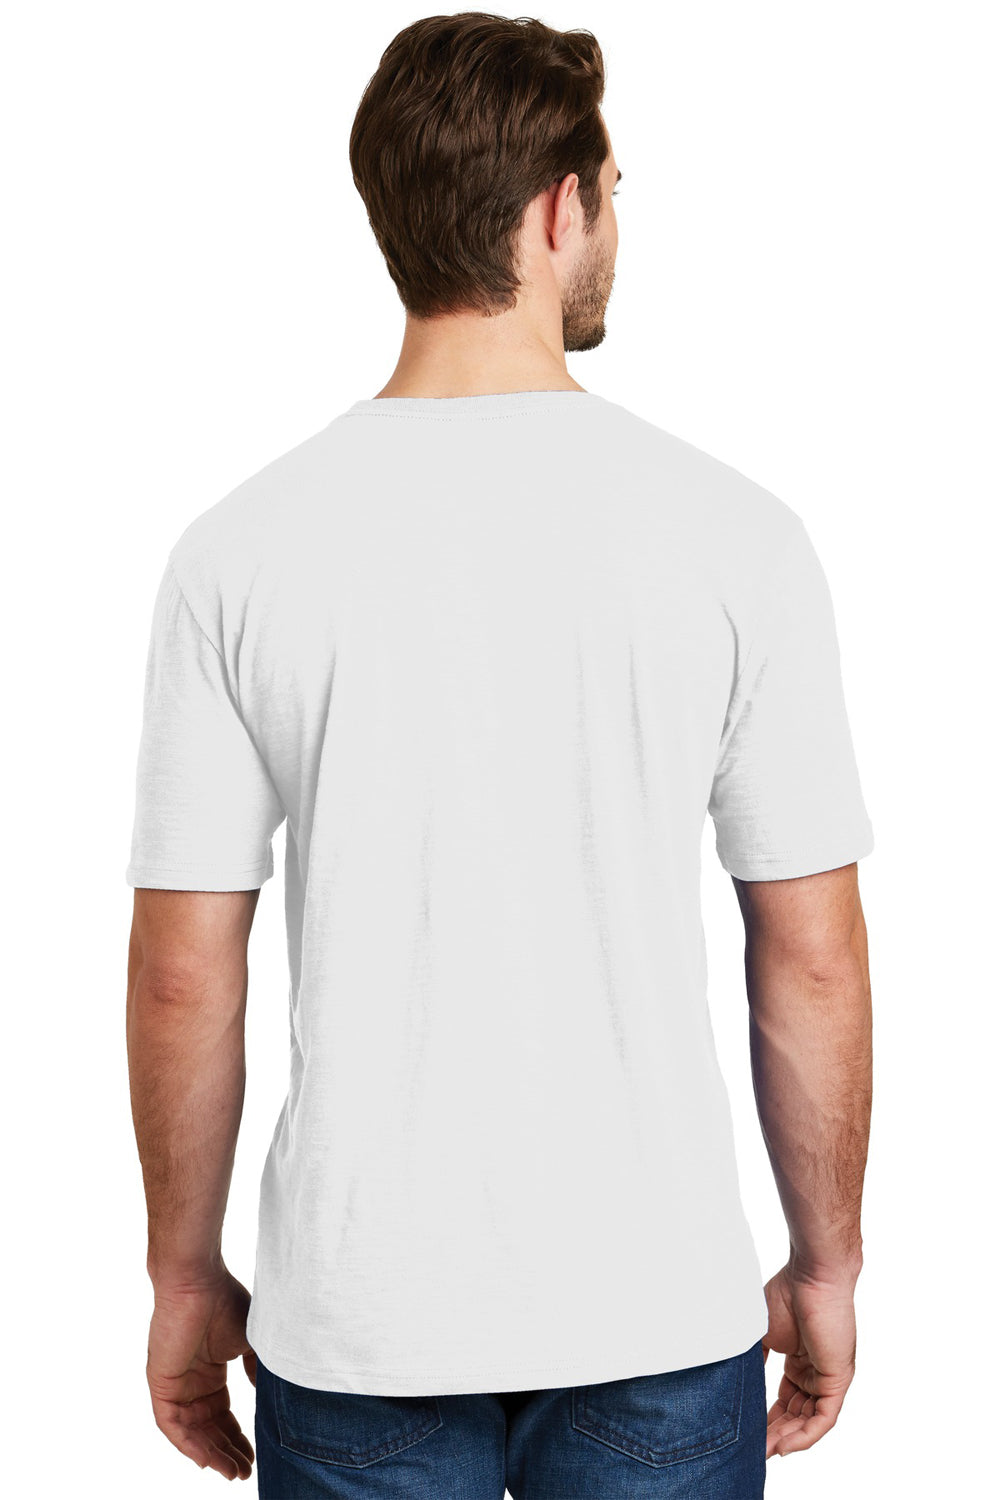 District DM108 Mens Perfect Blend Short Sleeve Crewneck T-Shirt White Back